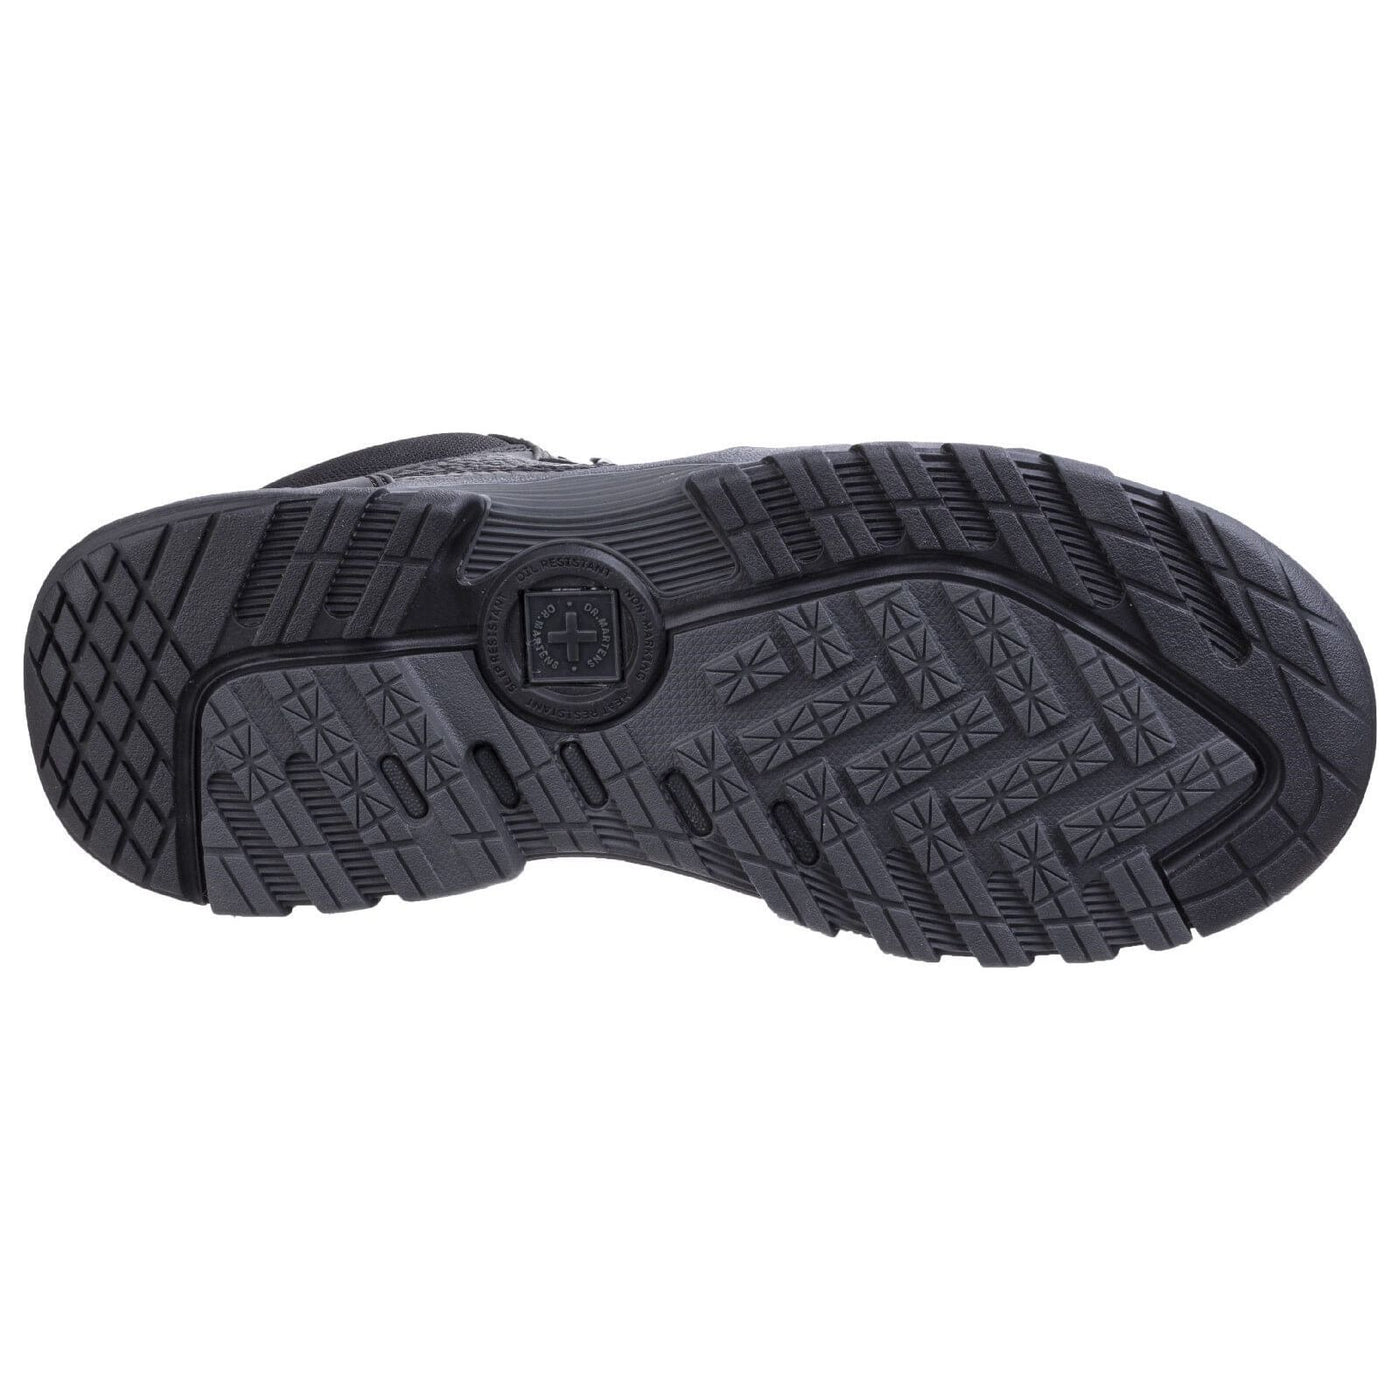 Dr Martens Grapple Safety Boots-Black-3